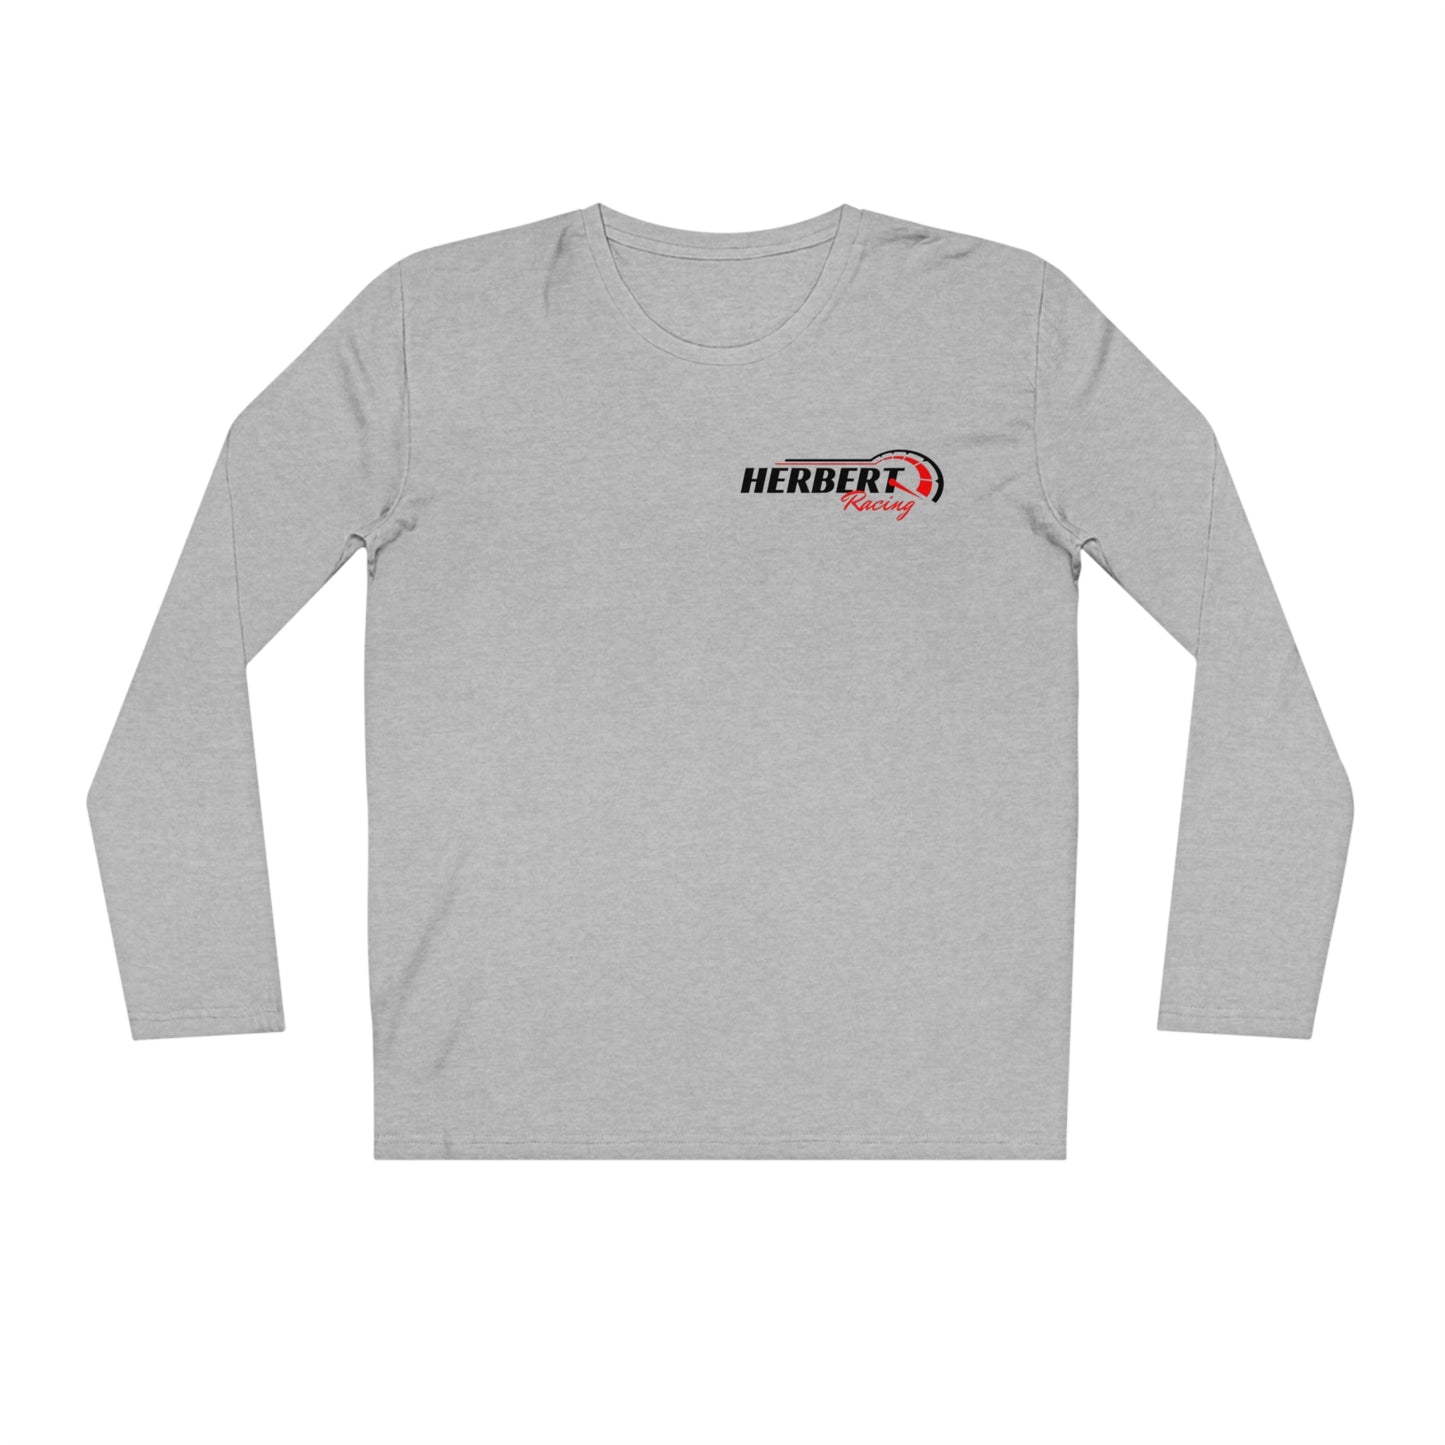 Men's Herbert Racing Long Sleeve Shirt